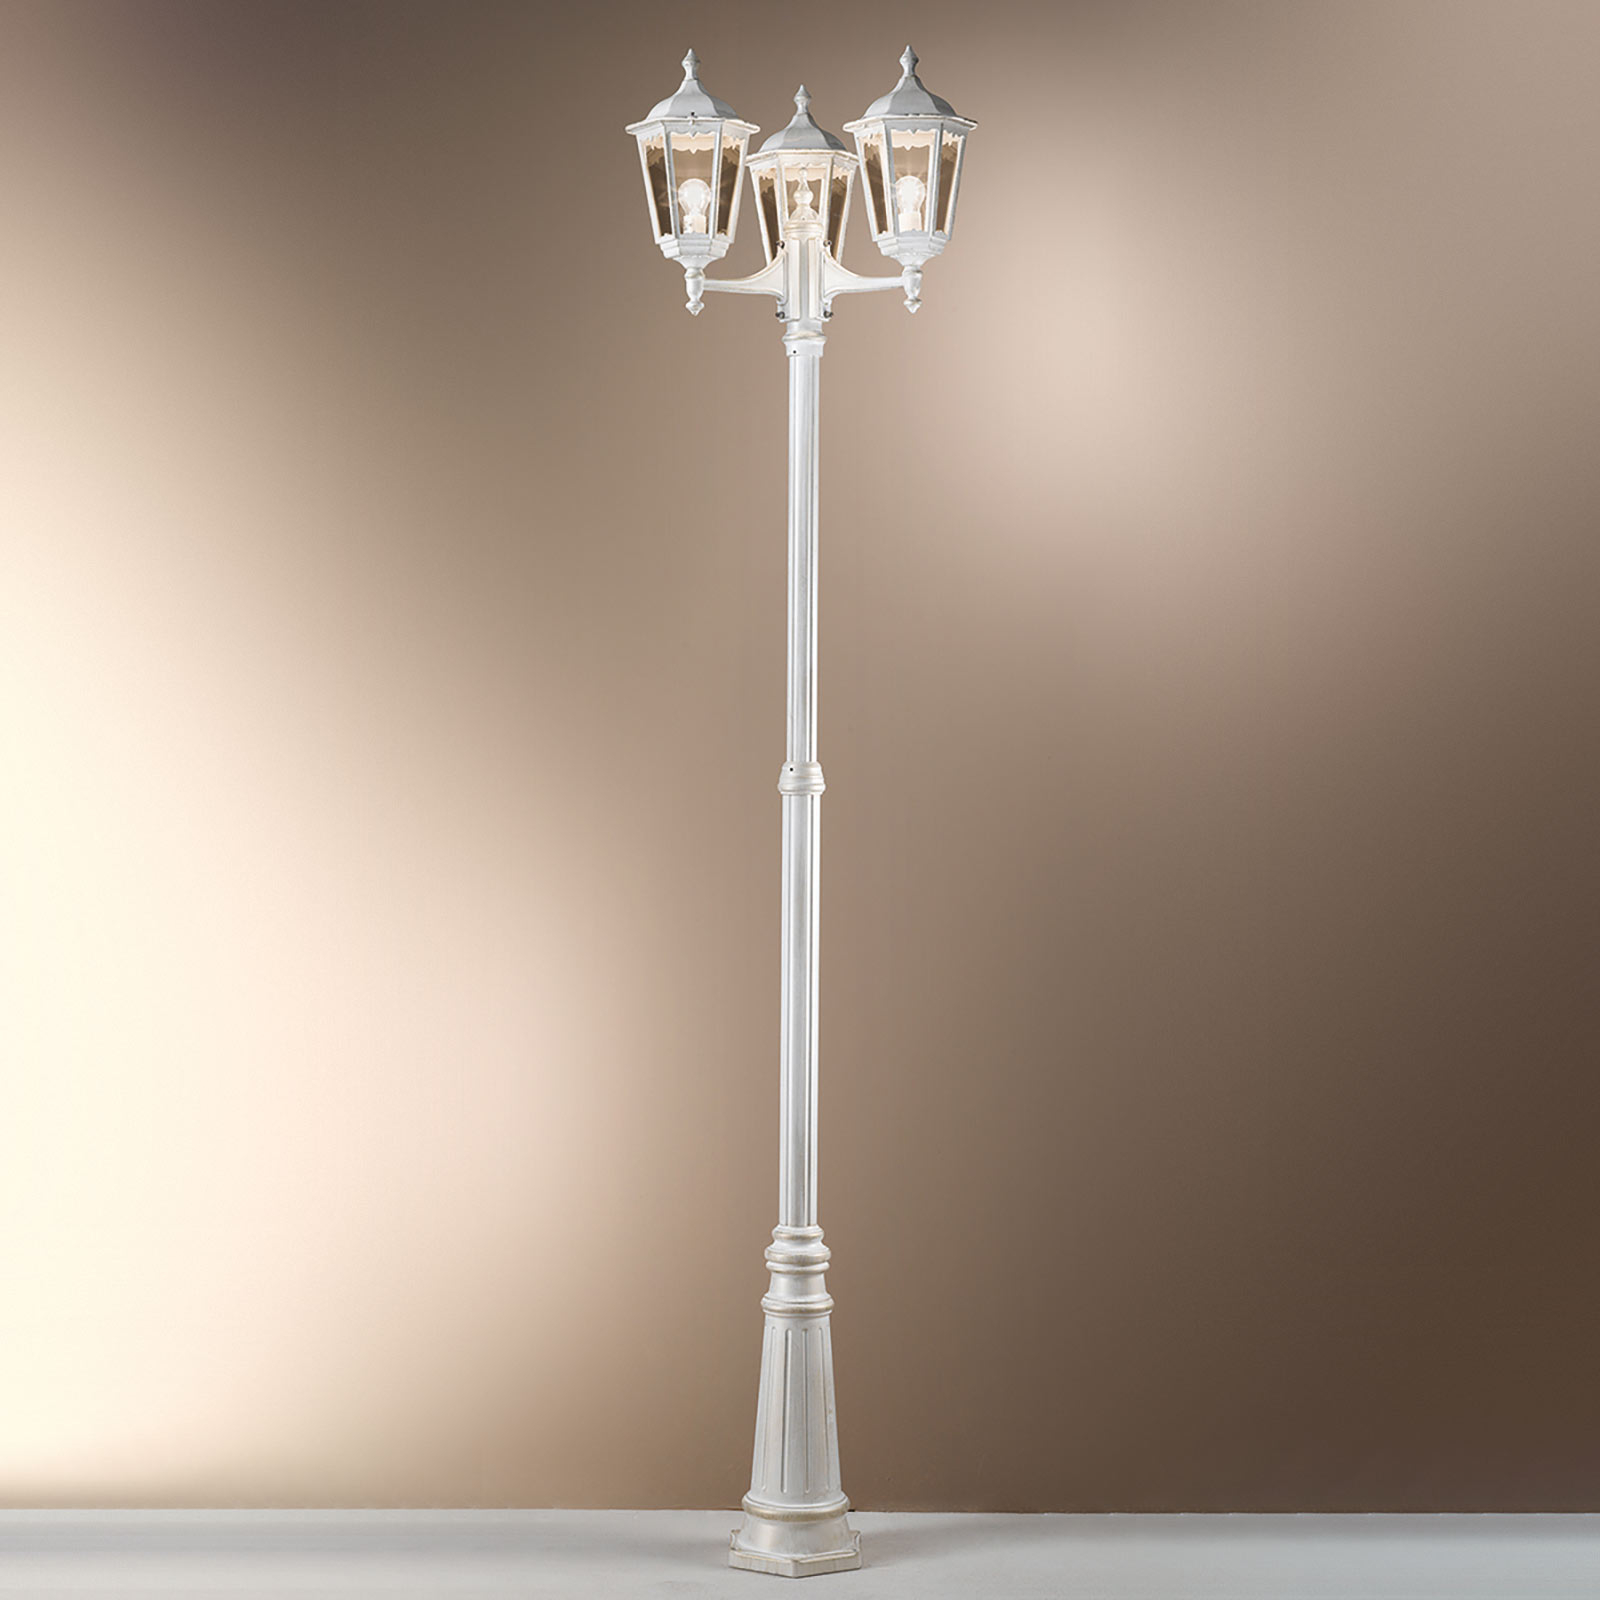 Lyktstolpe Puchberg 3 lampor, 255 cm, vit-guld